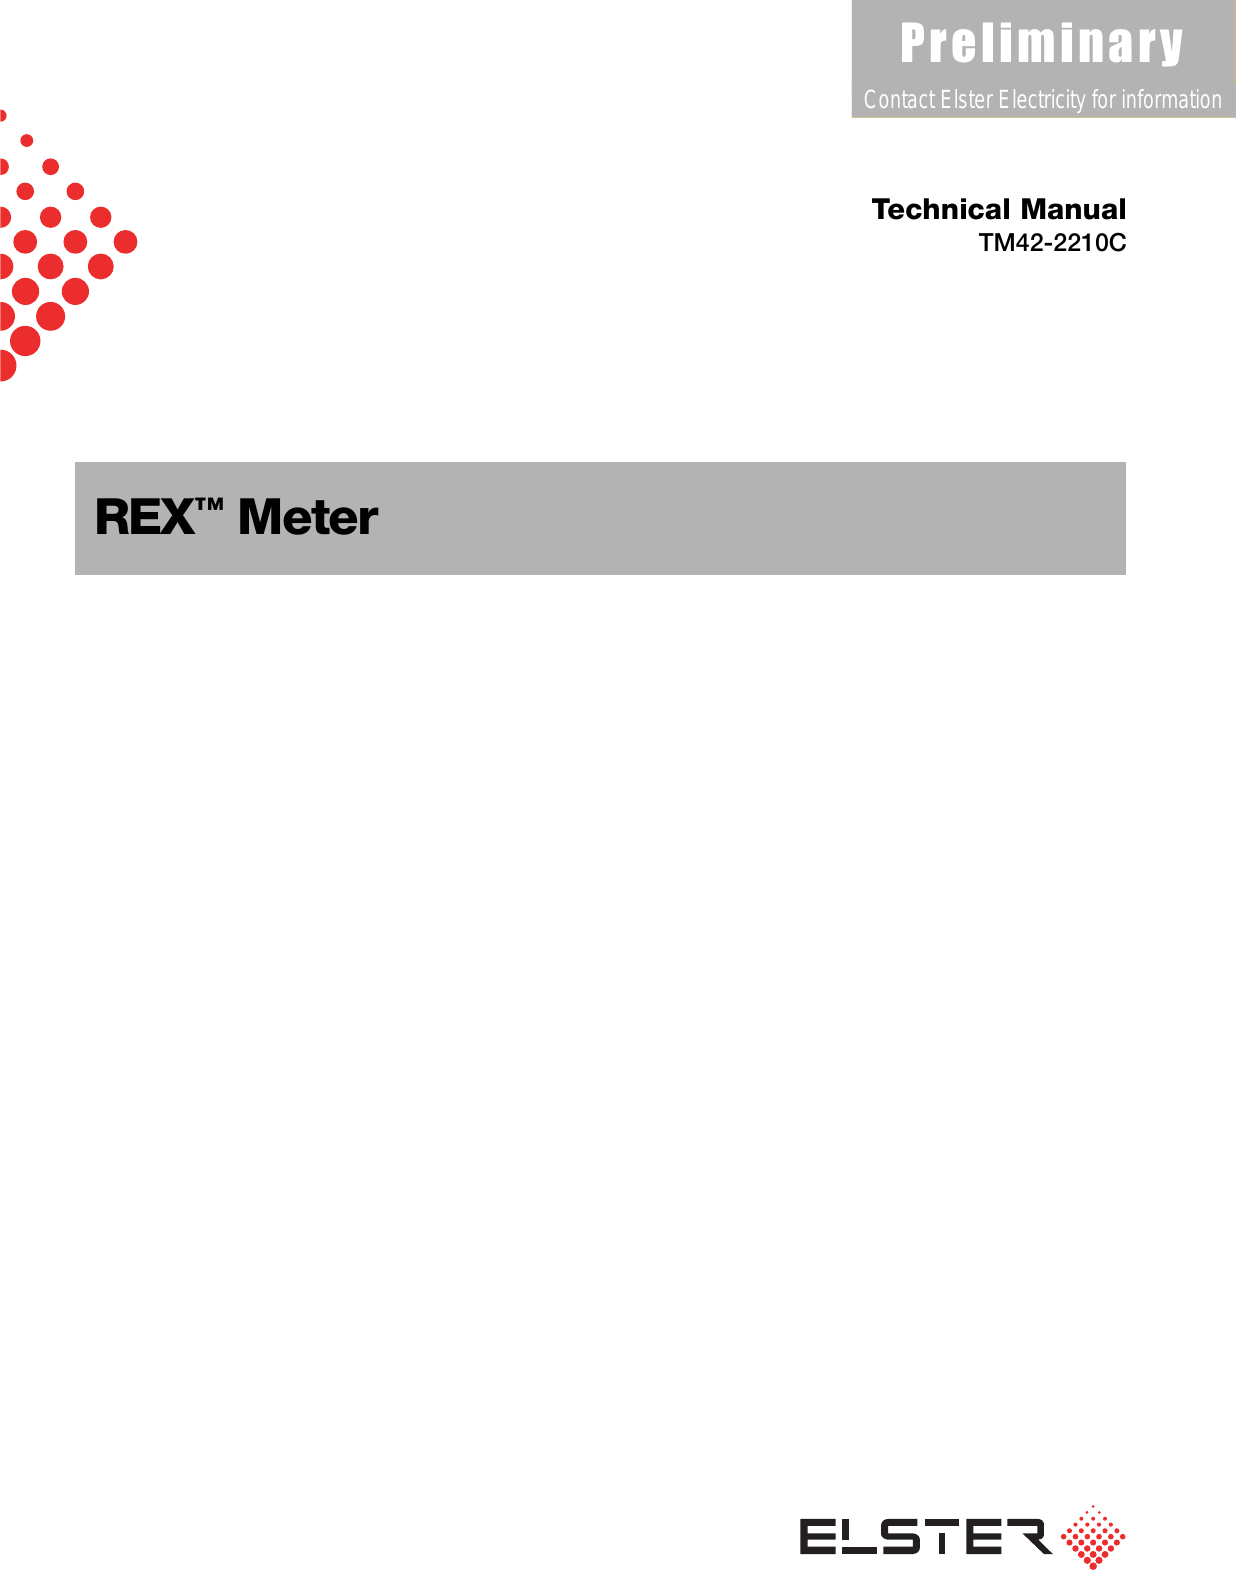 3UHOLPLQDU\Contact Elster Electricity for informationREX™ MeterTechnical ManualTM42-2210C